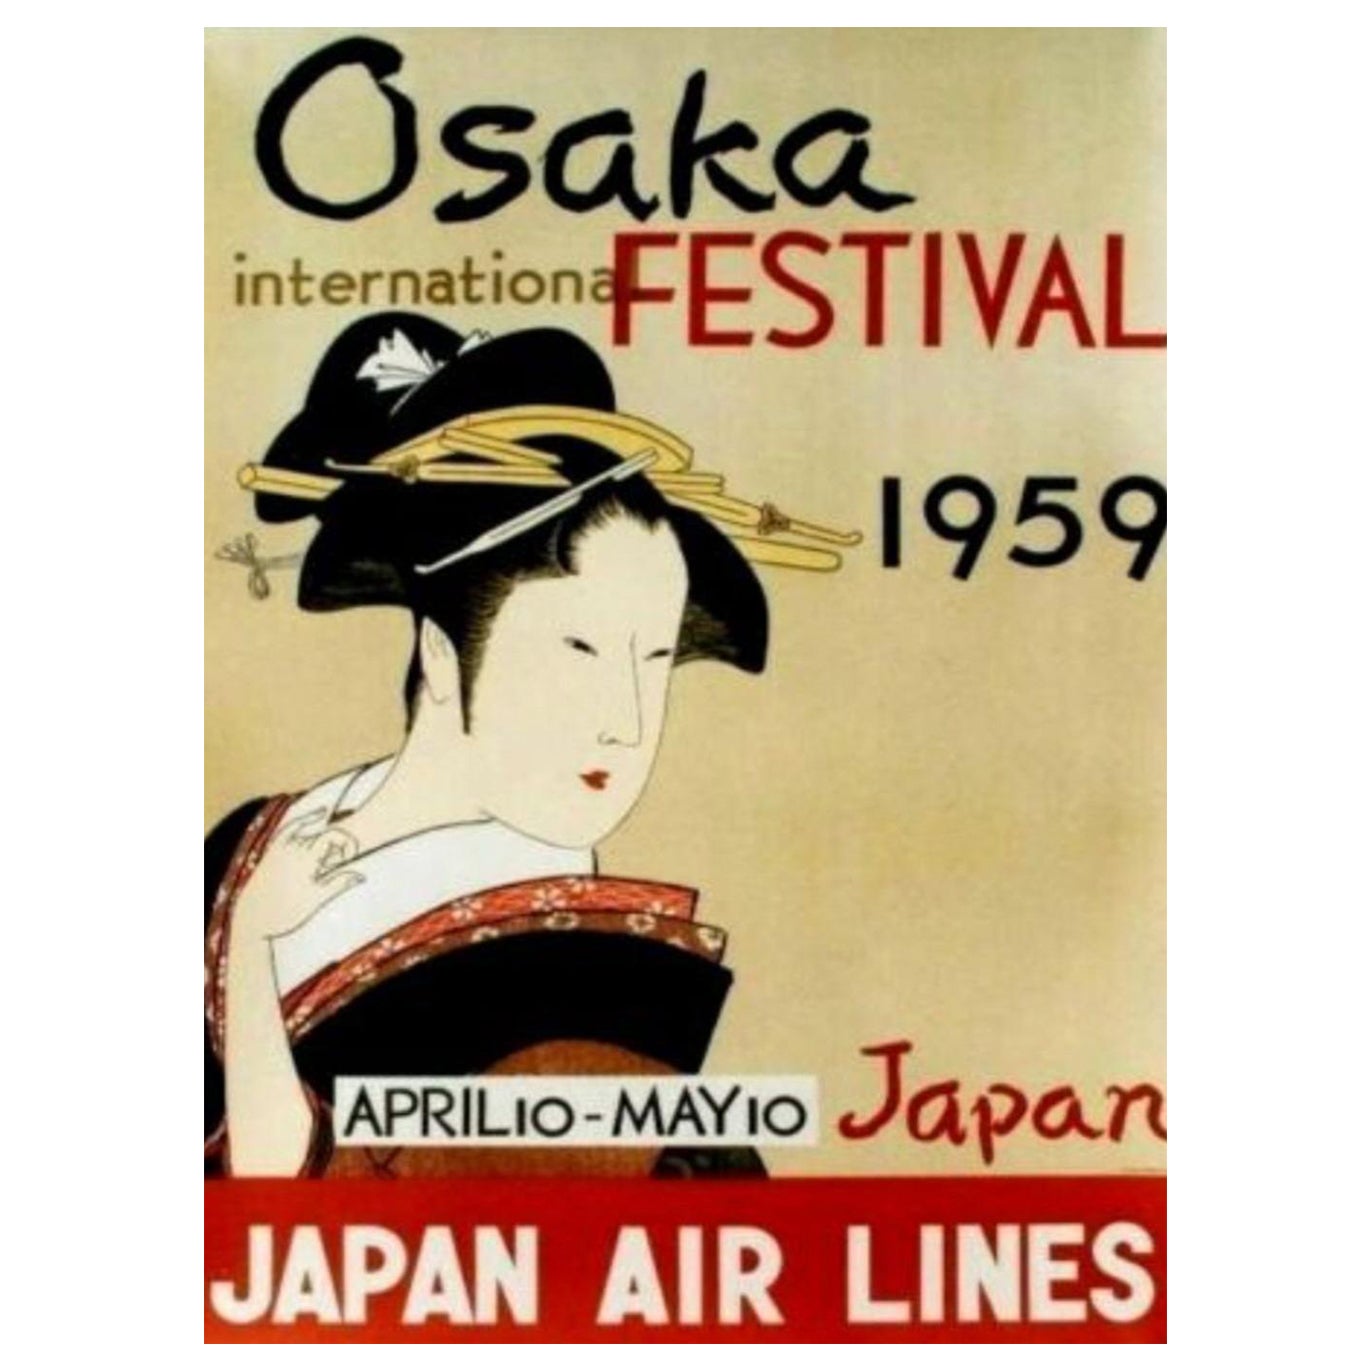 1959 Japan Air Lines, Osaka International Festival Original Vintage Poster